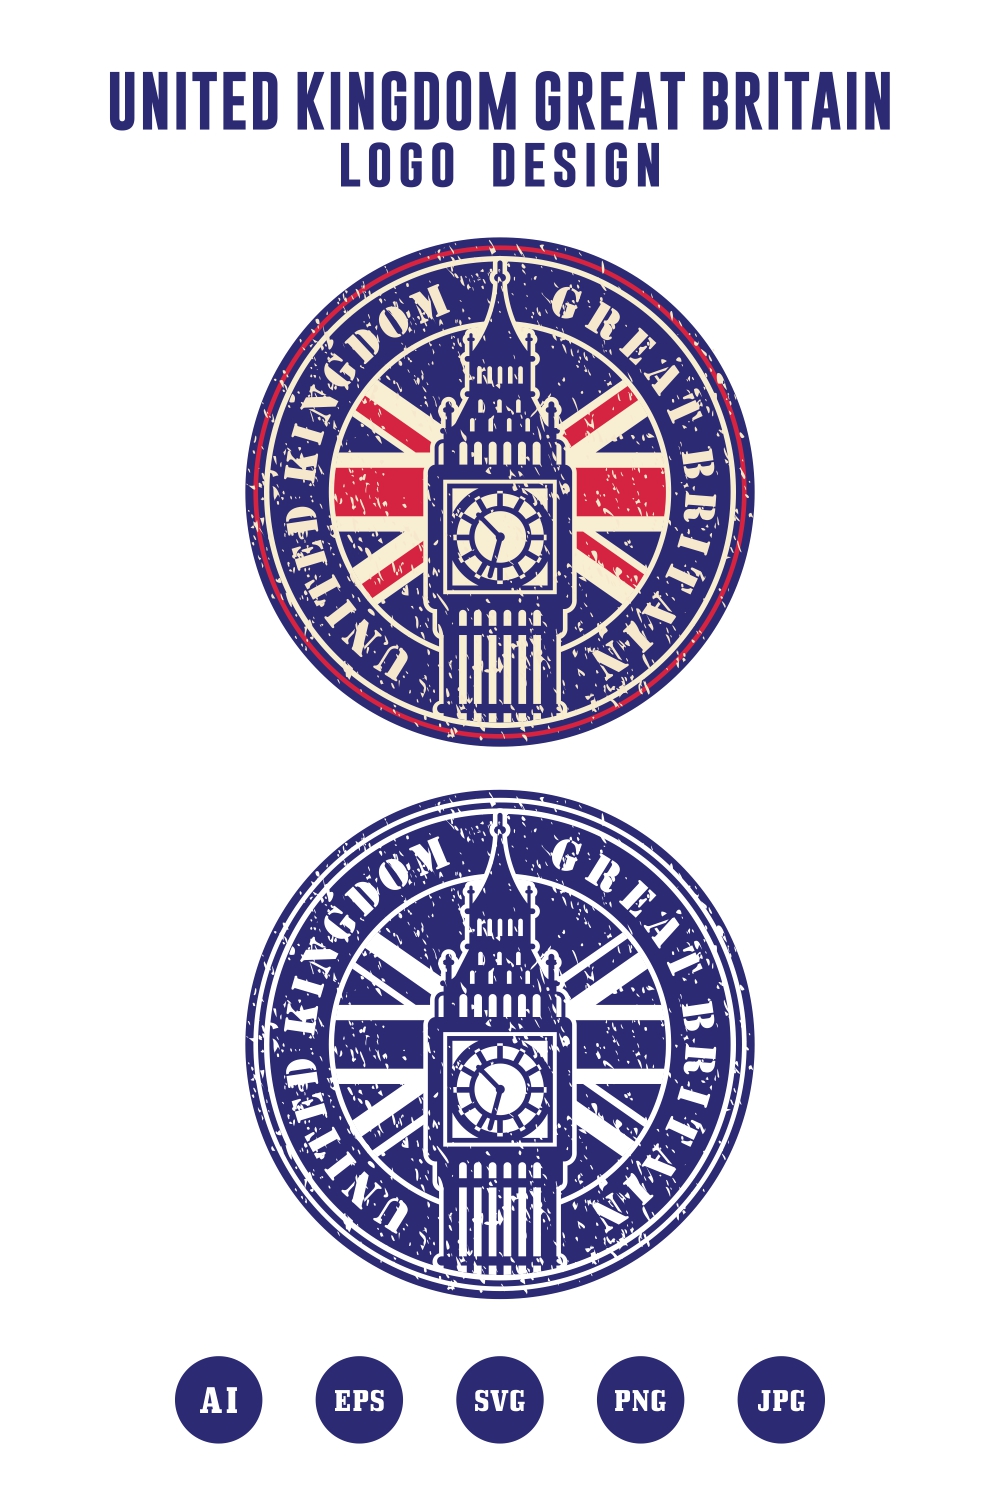 United kingdom great britania logo design - $4 pinterest preview image.